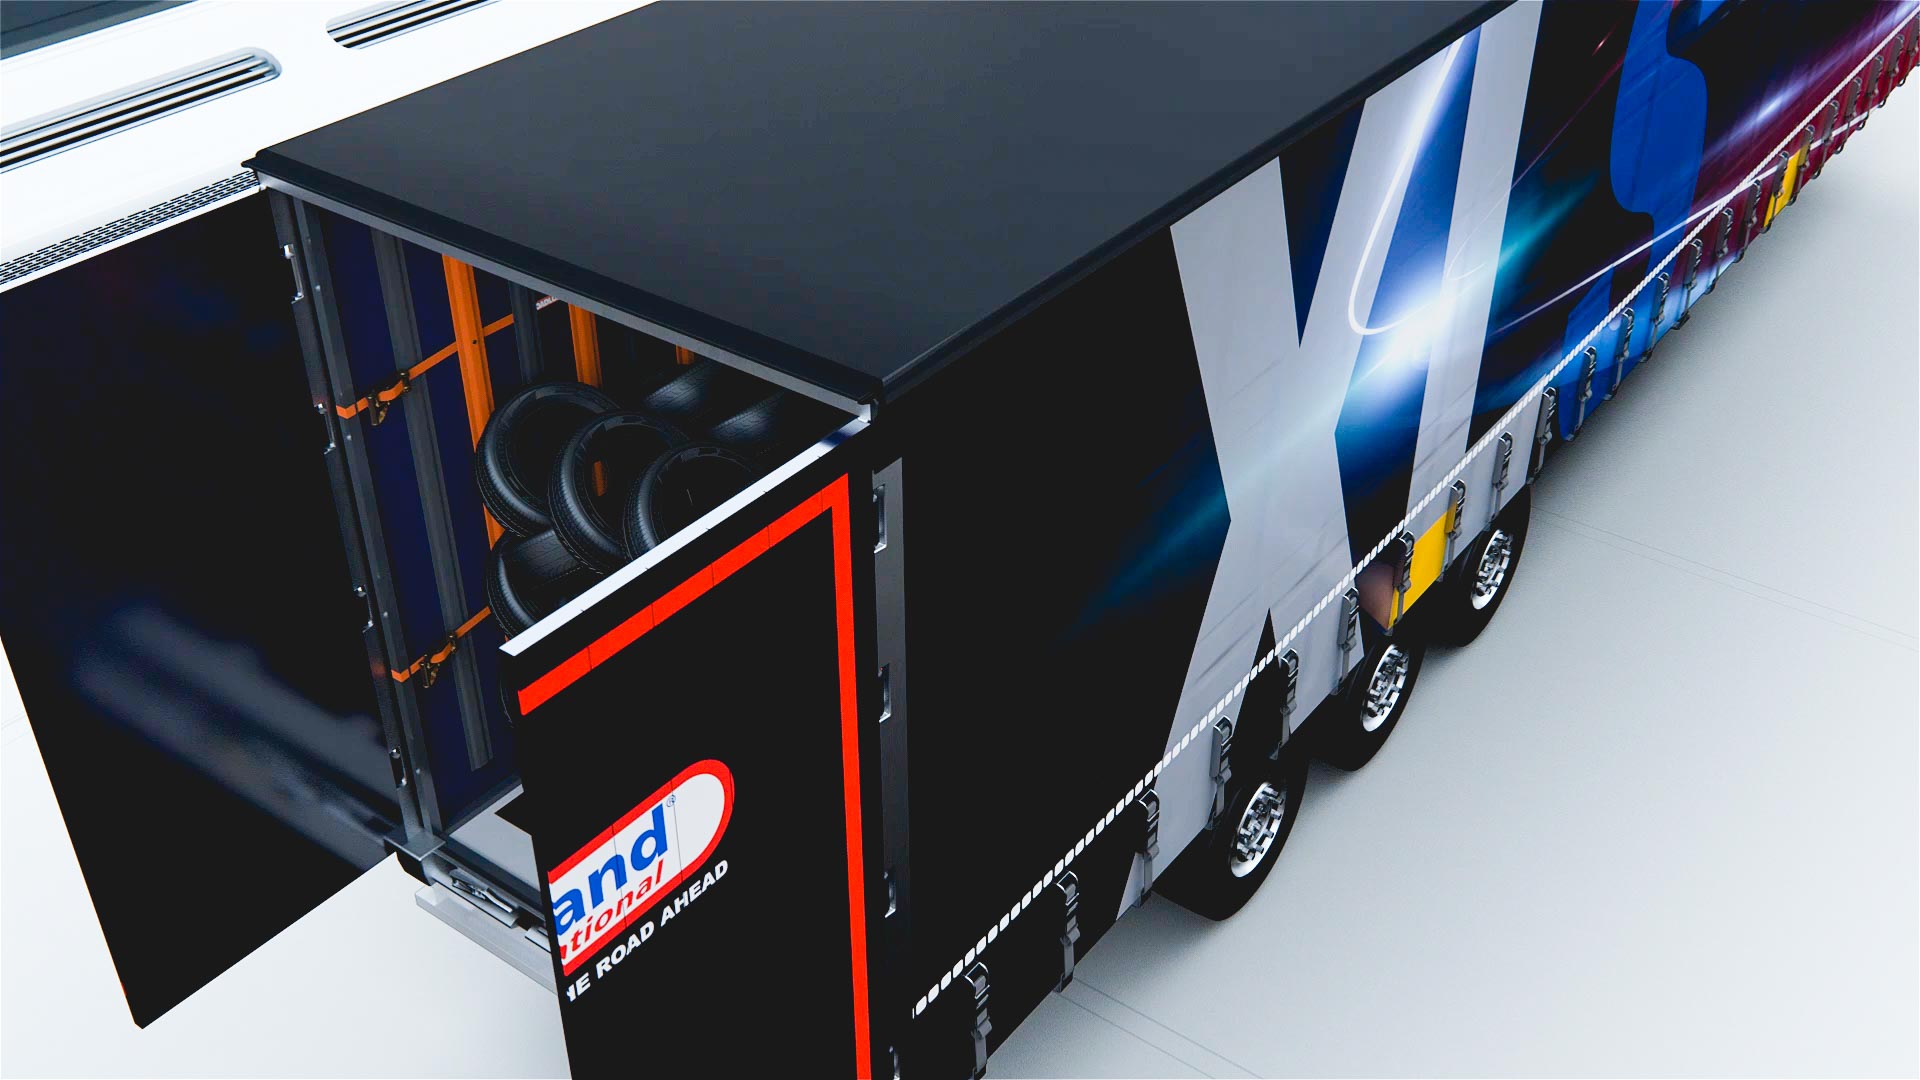 Roland XLS semi-trailer for intermodal bulk transport